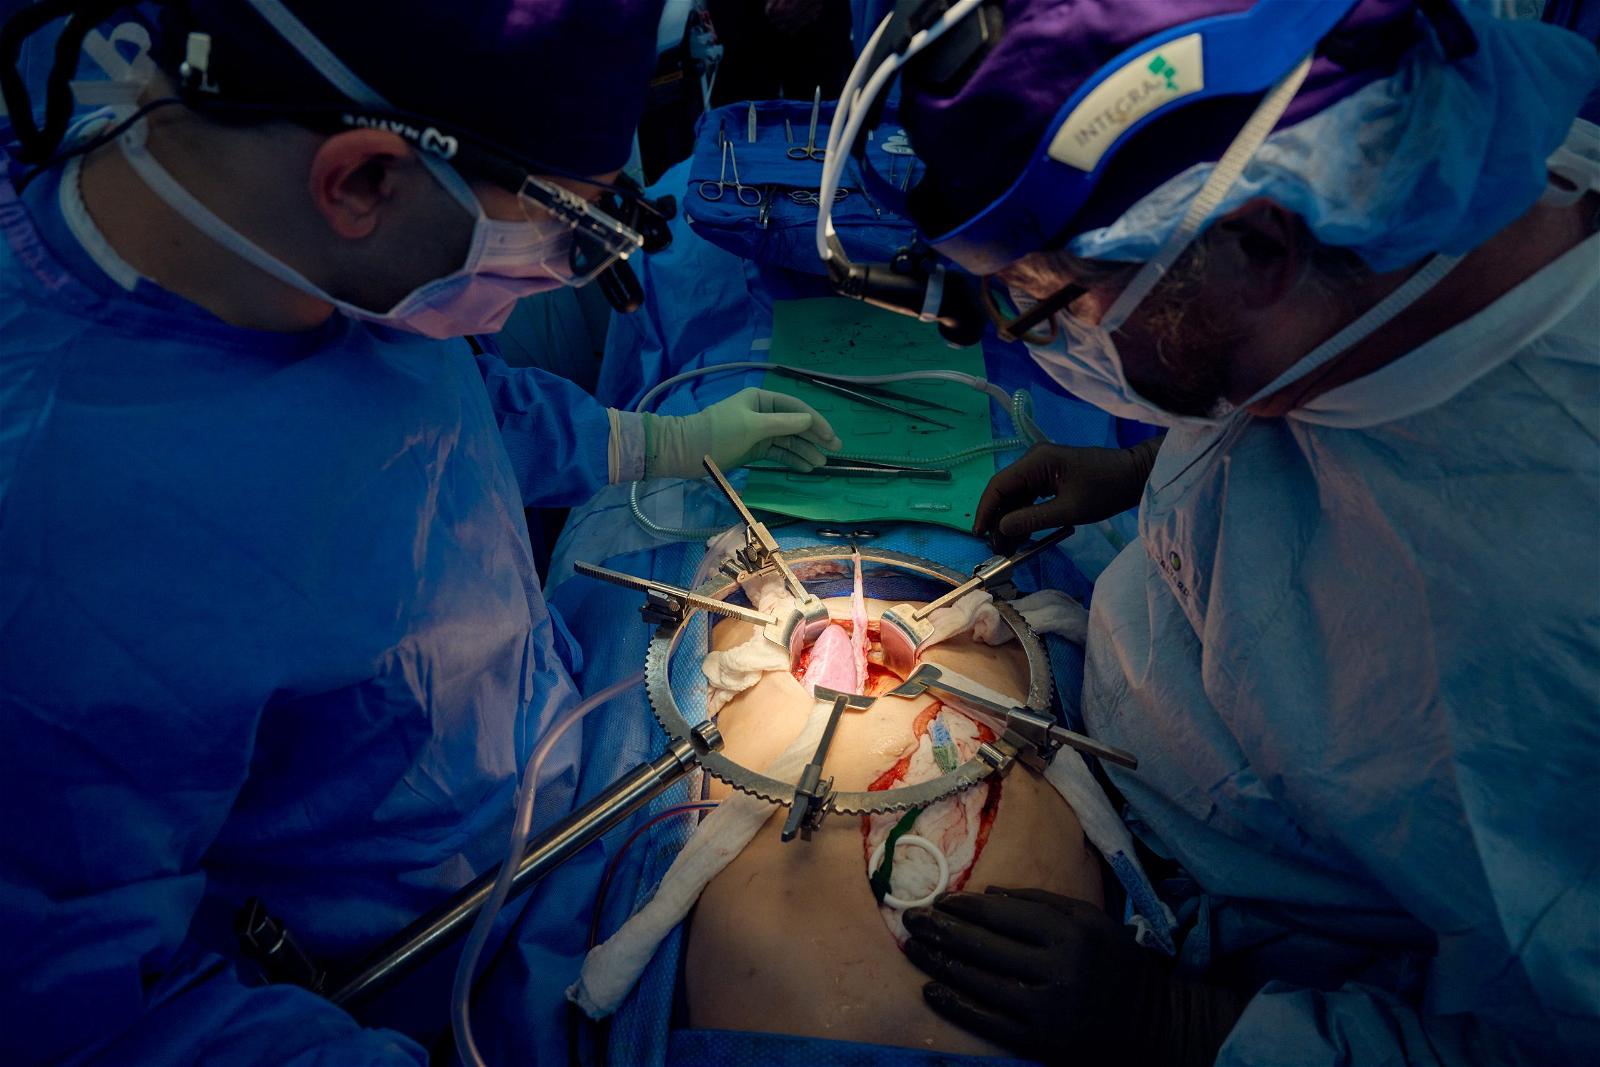 US surgeons report longest successful pigtohuman kidney transplant